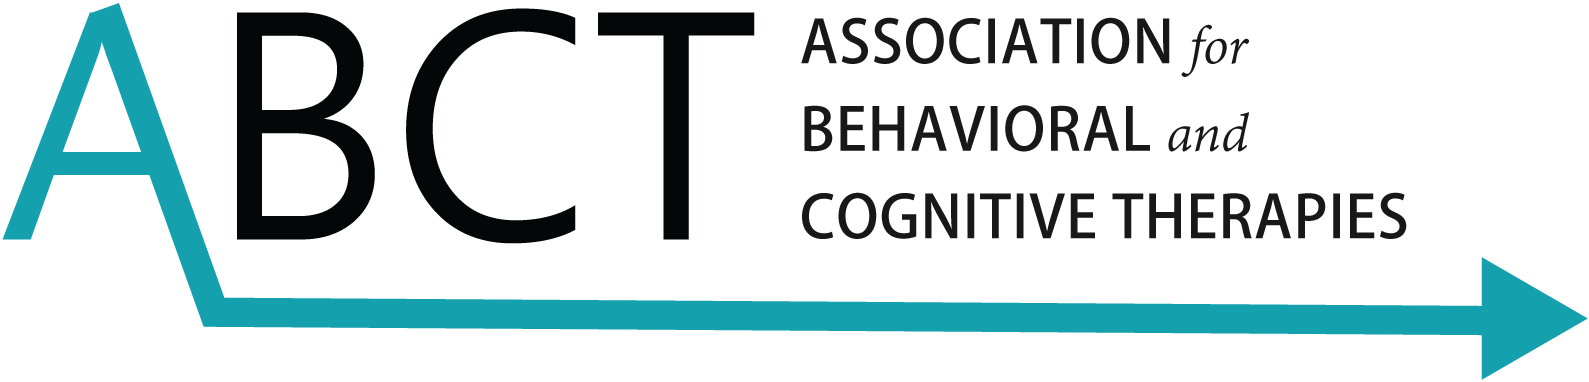 ABCT Logo